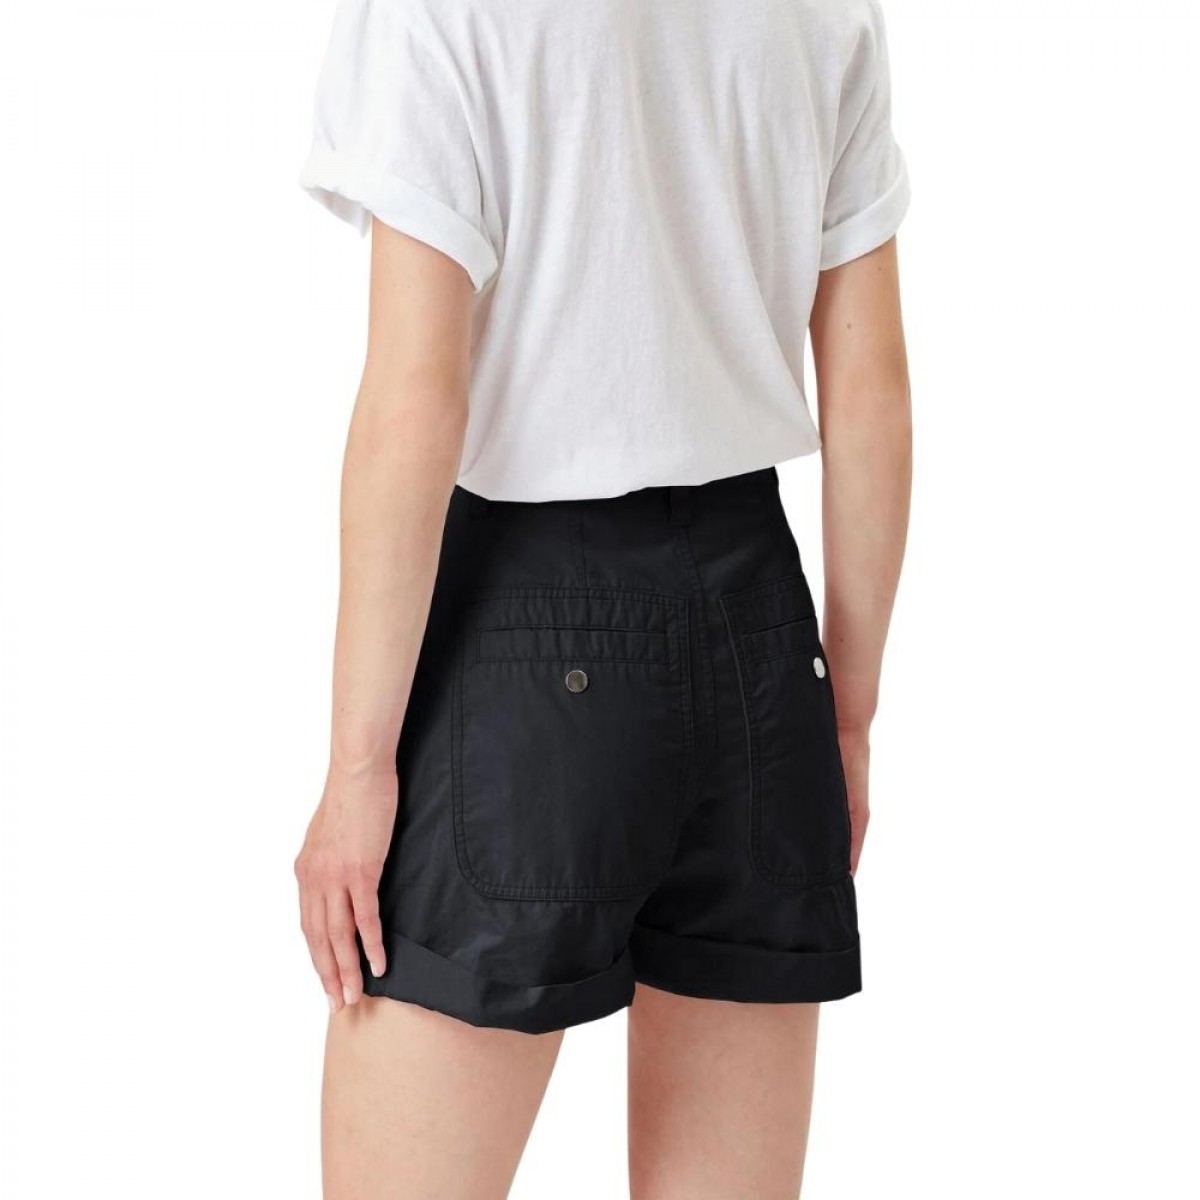 rachel shorts - faded black - ryg